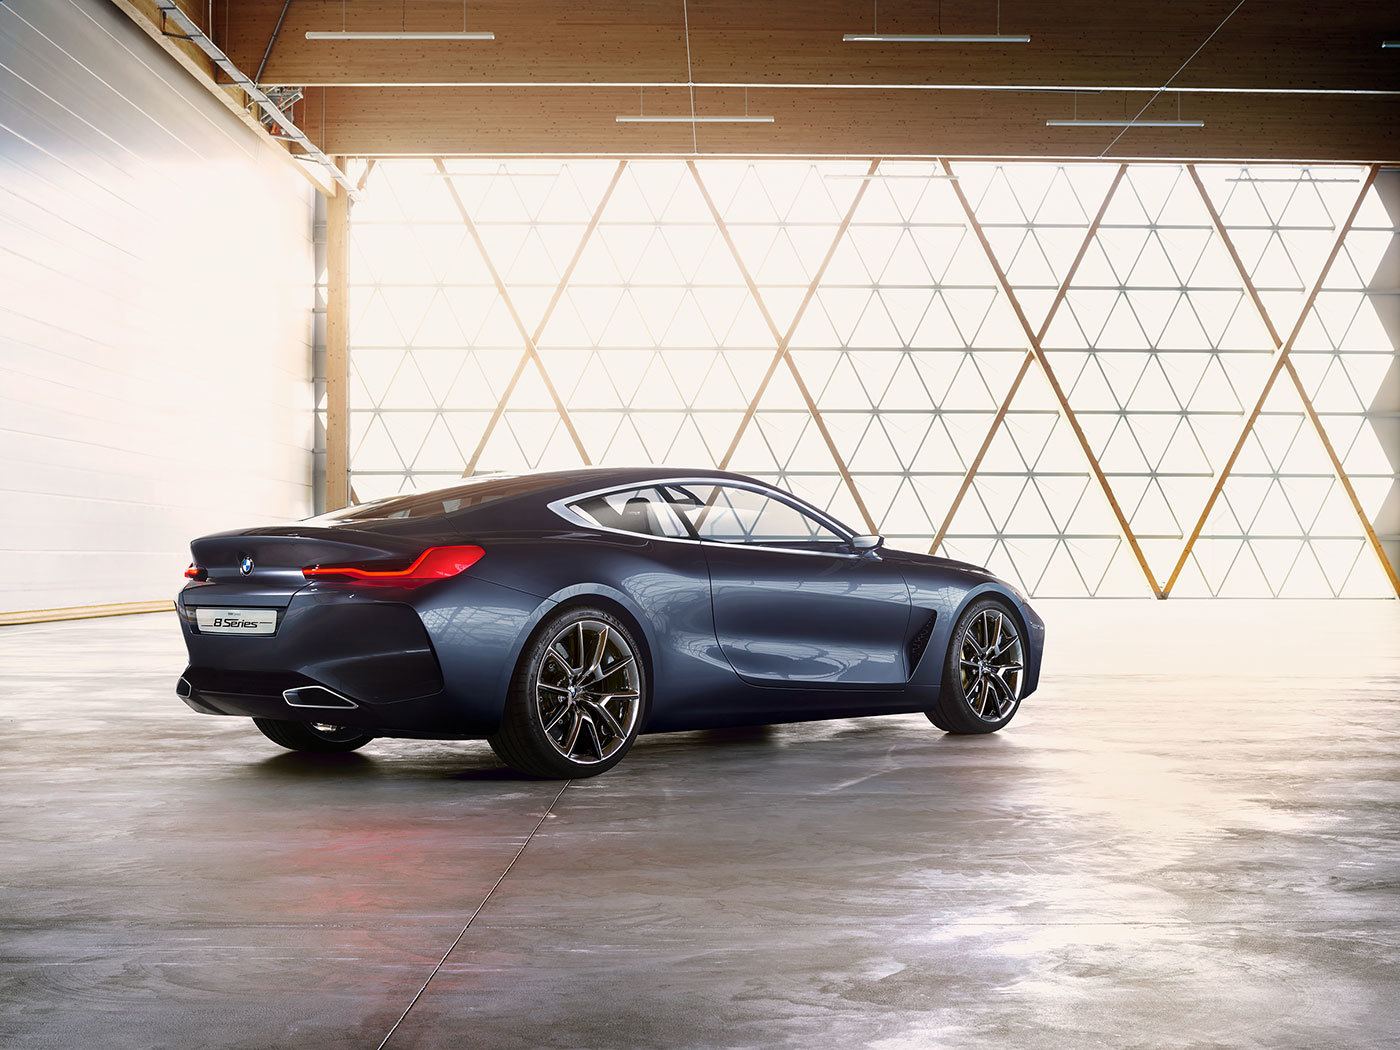 imagen 2 de BMW Serie 8 Concept, regreso al futuro. Ese deportivo coupé que querríamos todos.